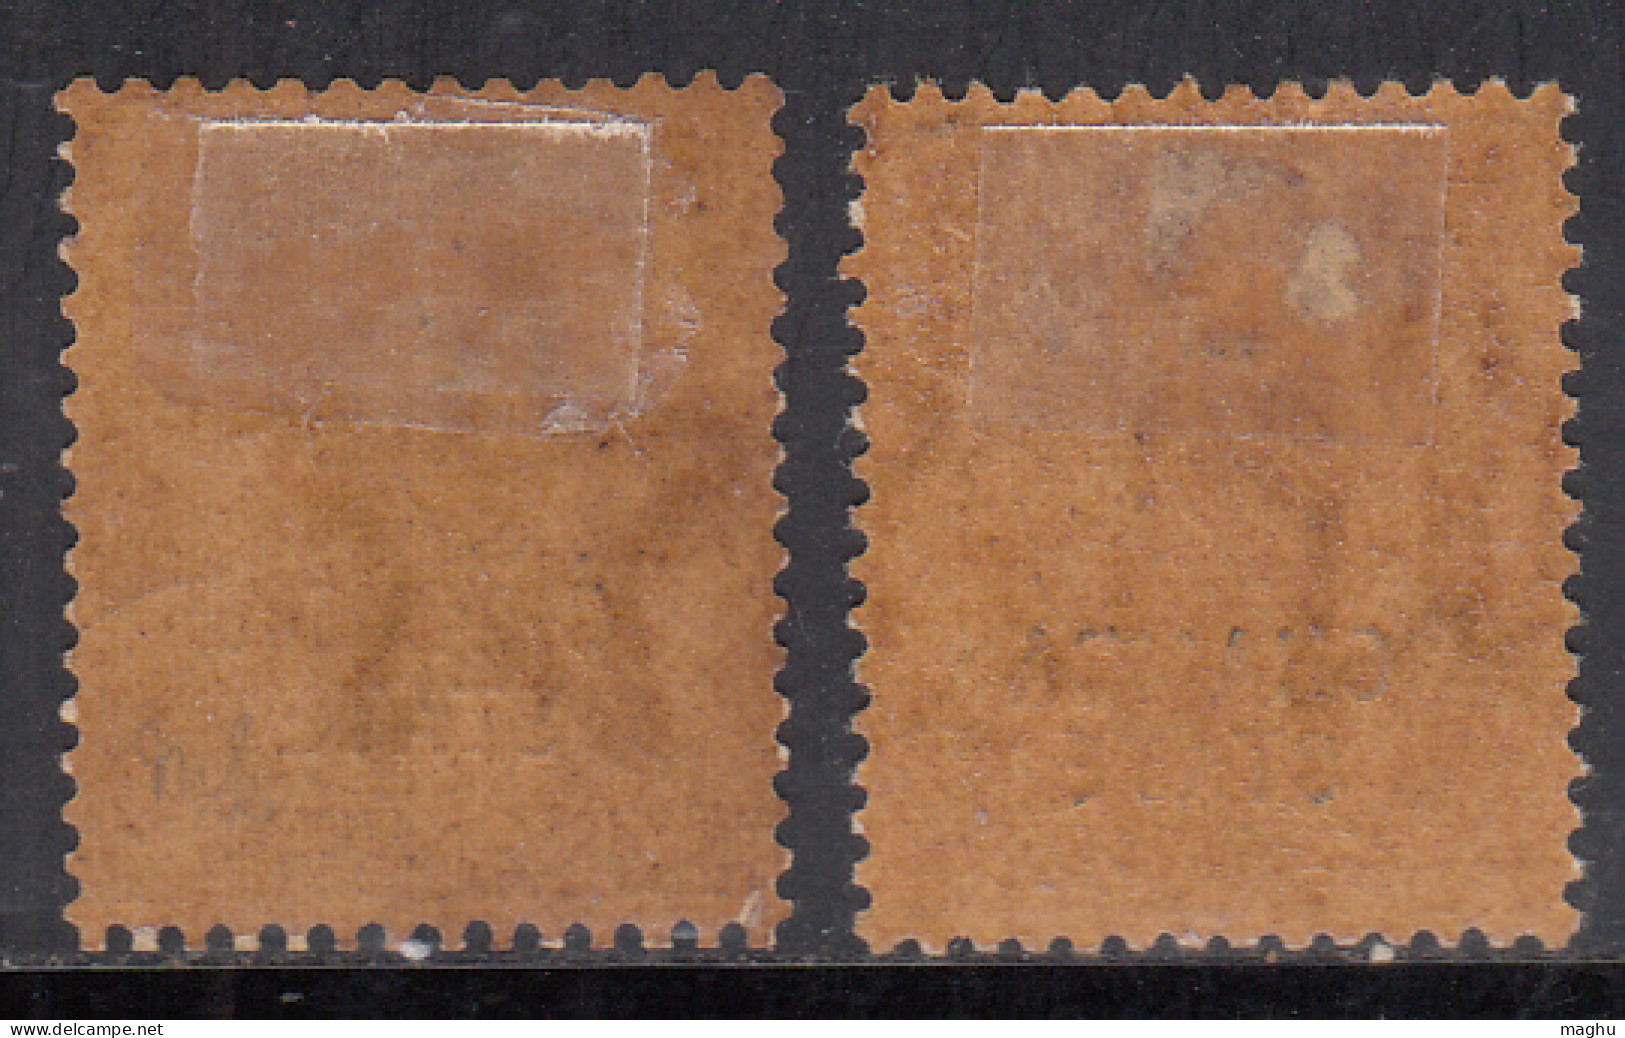 1½a MH Chamba, SG56 & SG57 (Type A & Type B), KGV Series (Single Star) 1923-1927, British India, Cat £255.00 - Chamba